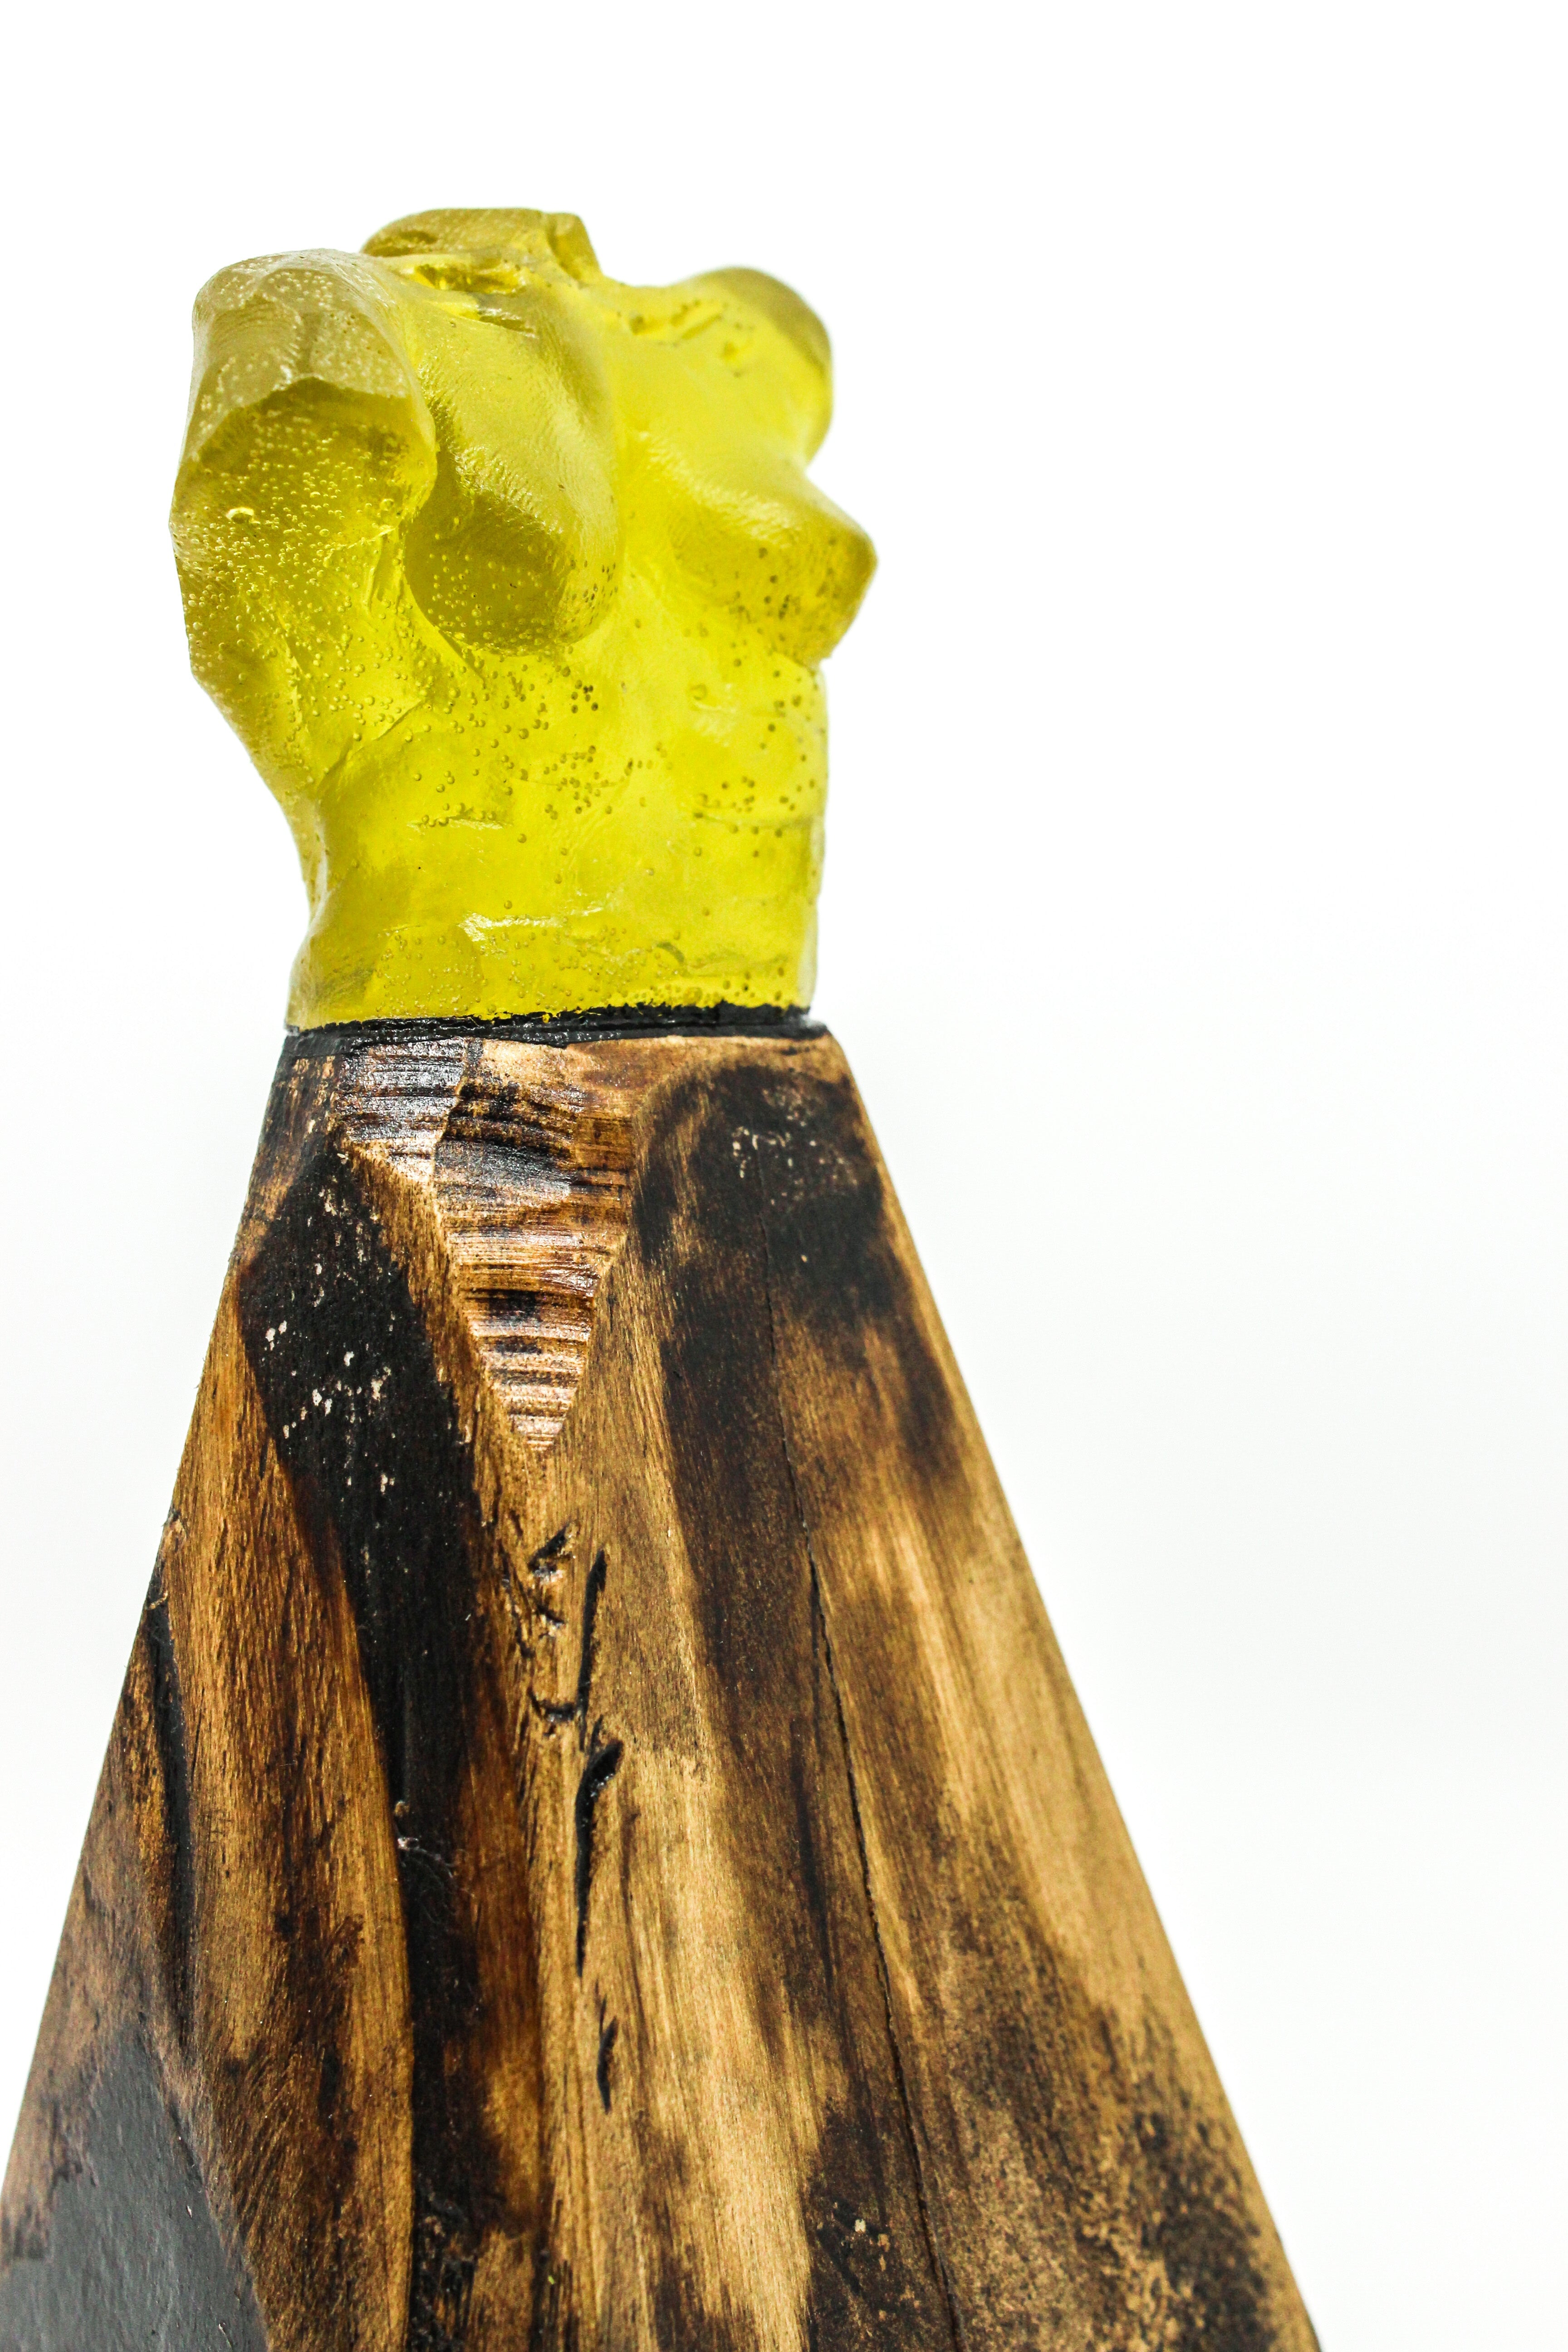 January One Resin and Wood Torso Statuette Sculpture & Art object Jan Van Dijk 